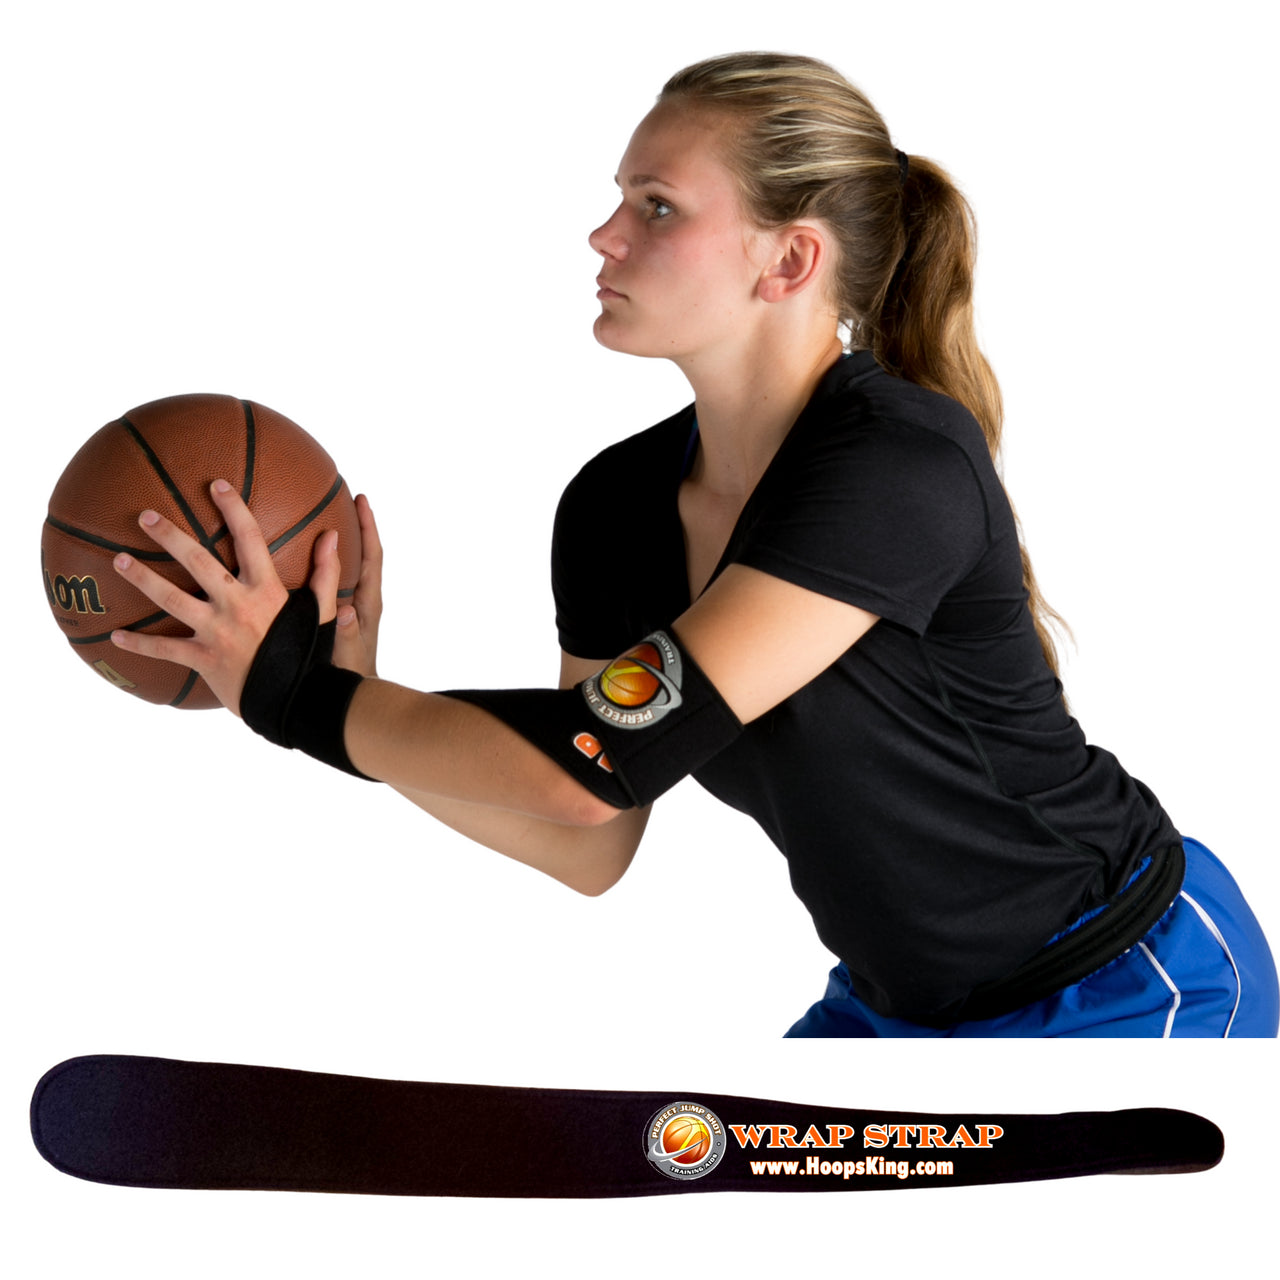 Wrap Strap Off Hand basketball shooting aid